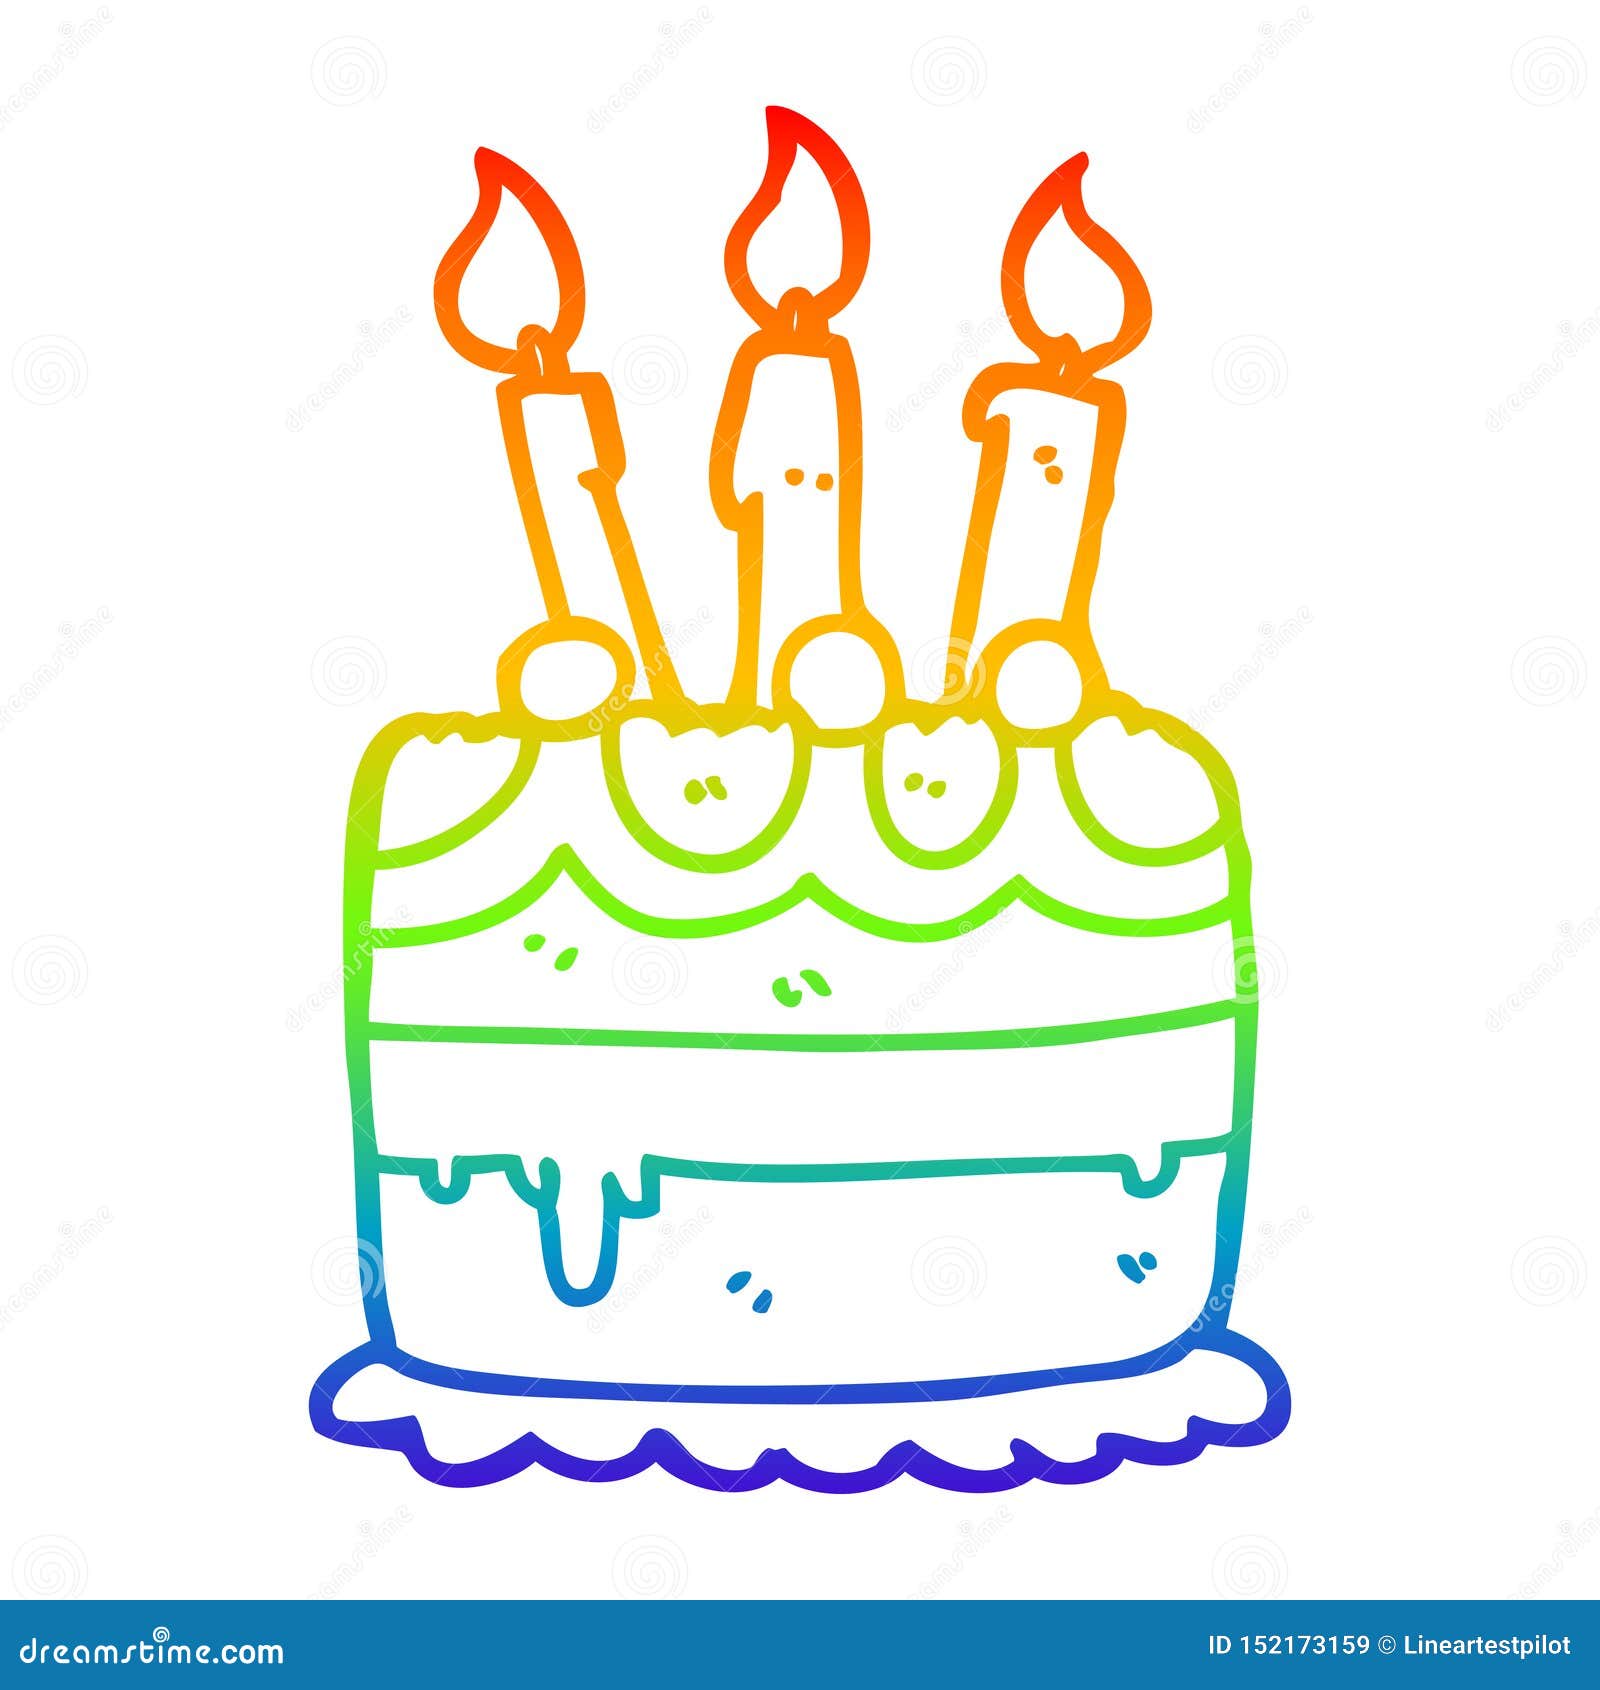 A Creative Rainbow Gradient Line Drawing Cartoon Birthday Cake Stock Vector  - Illustration of gradient, food: 152173159